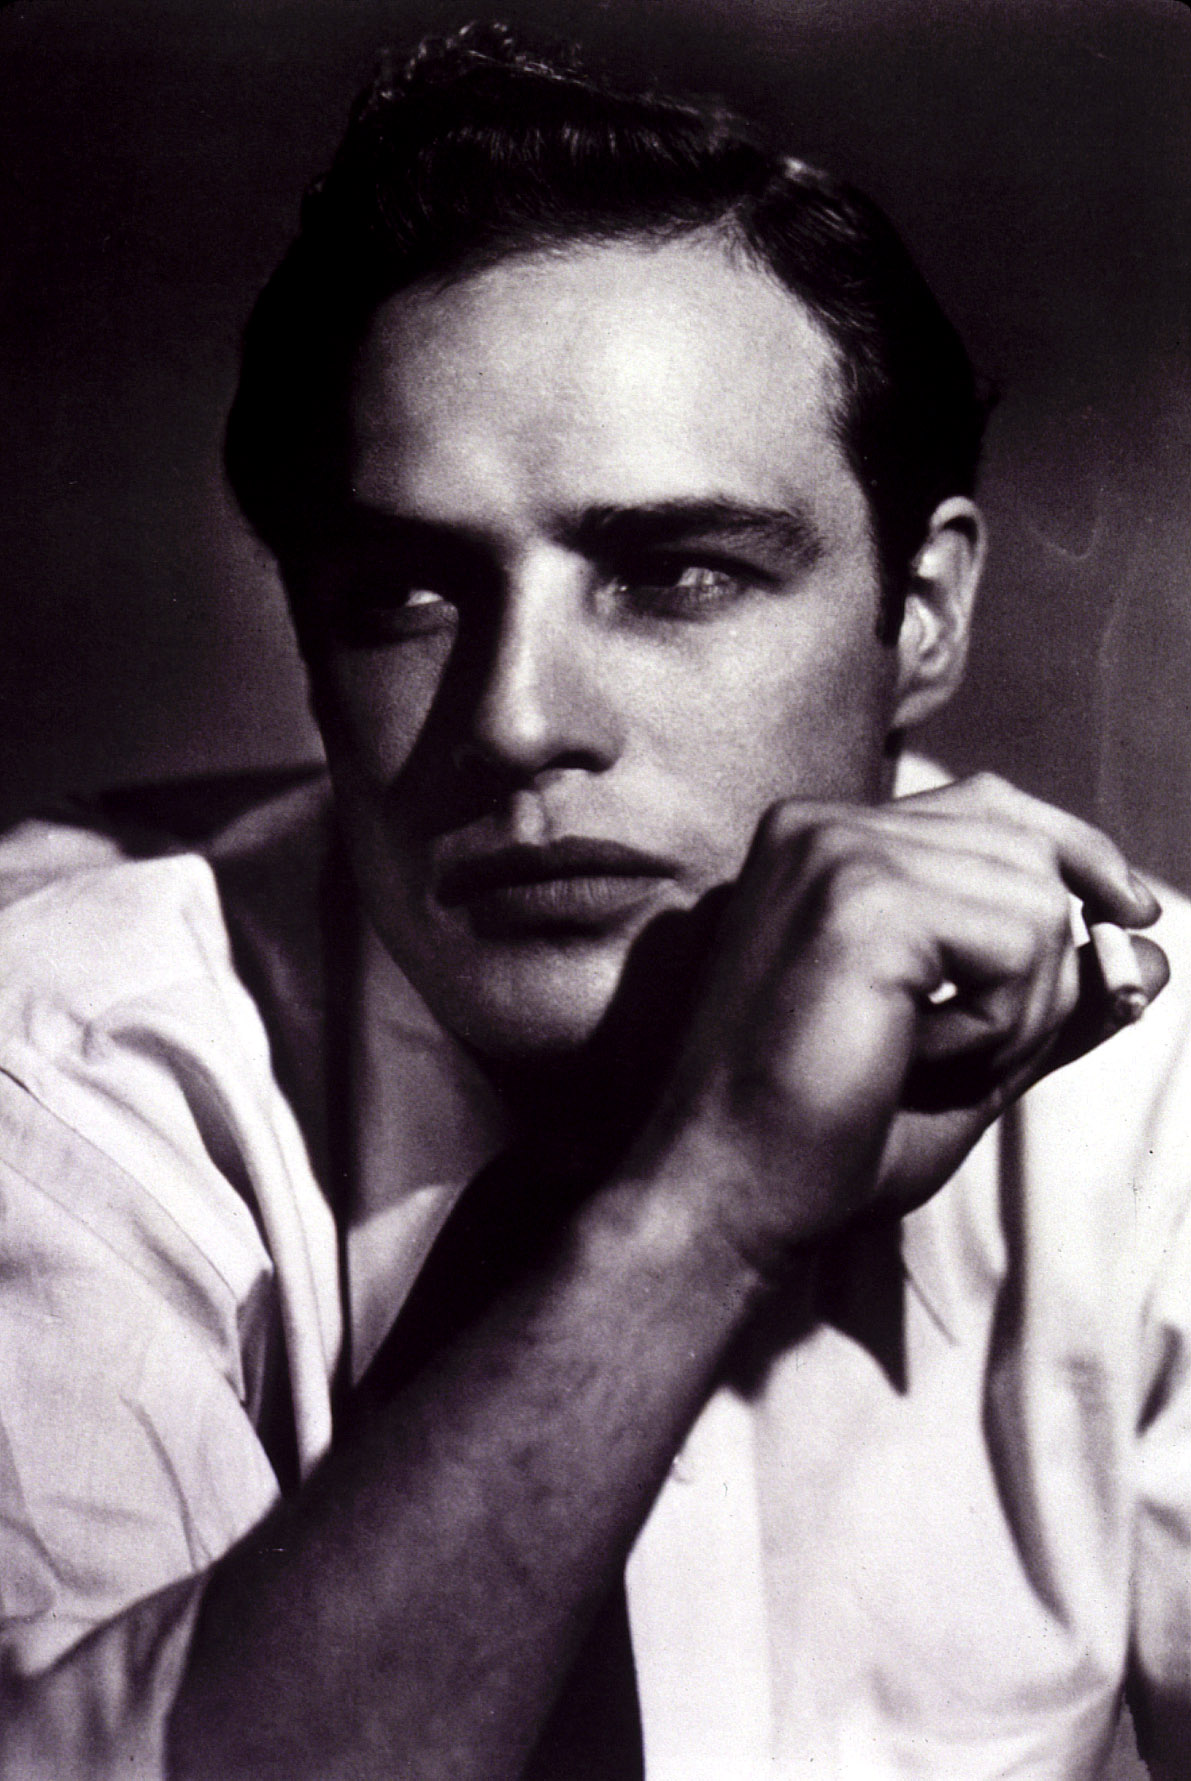 Marlon Brando photo 263 of 266 pics, wallpaper - photo #491072 - ThePlace2